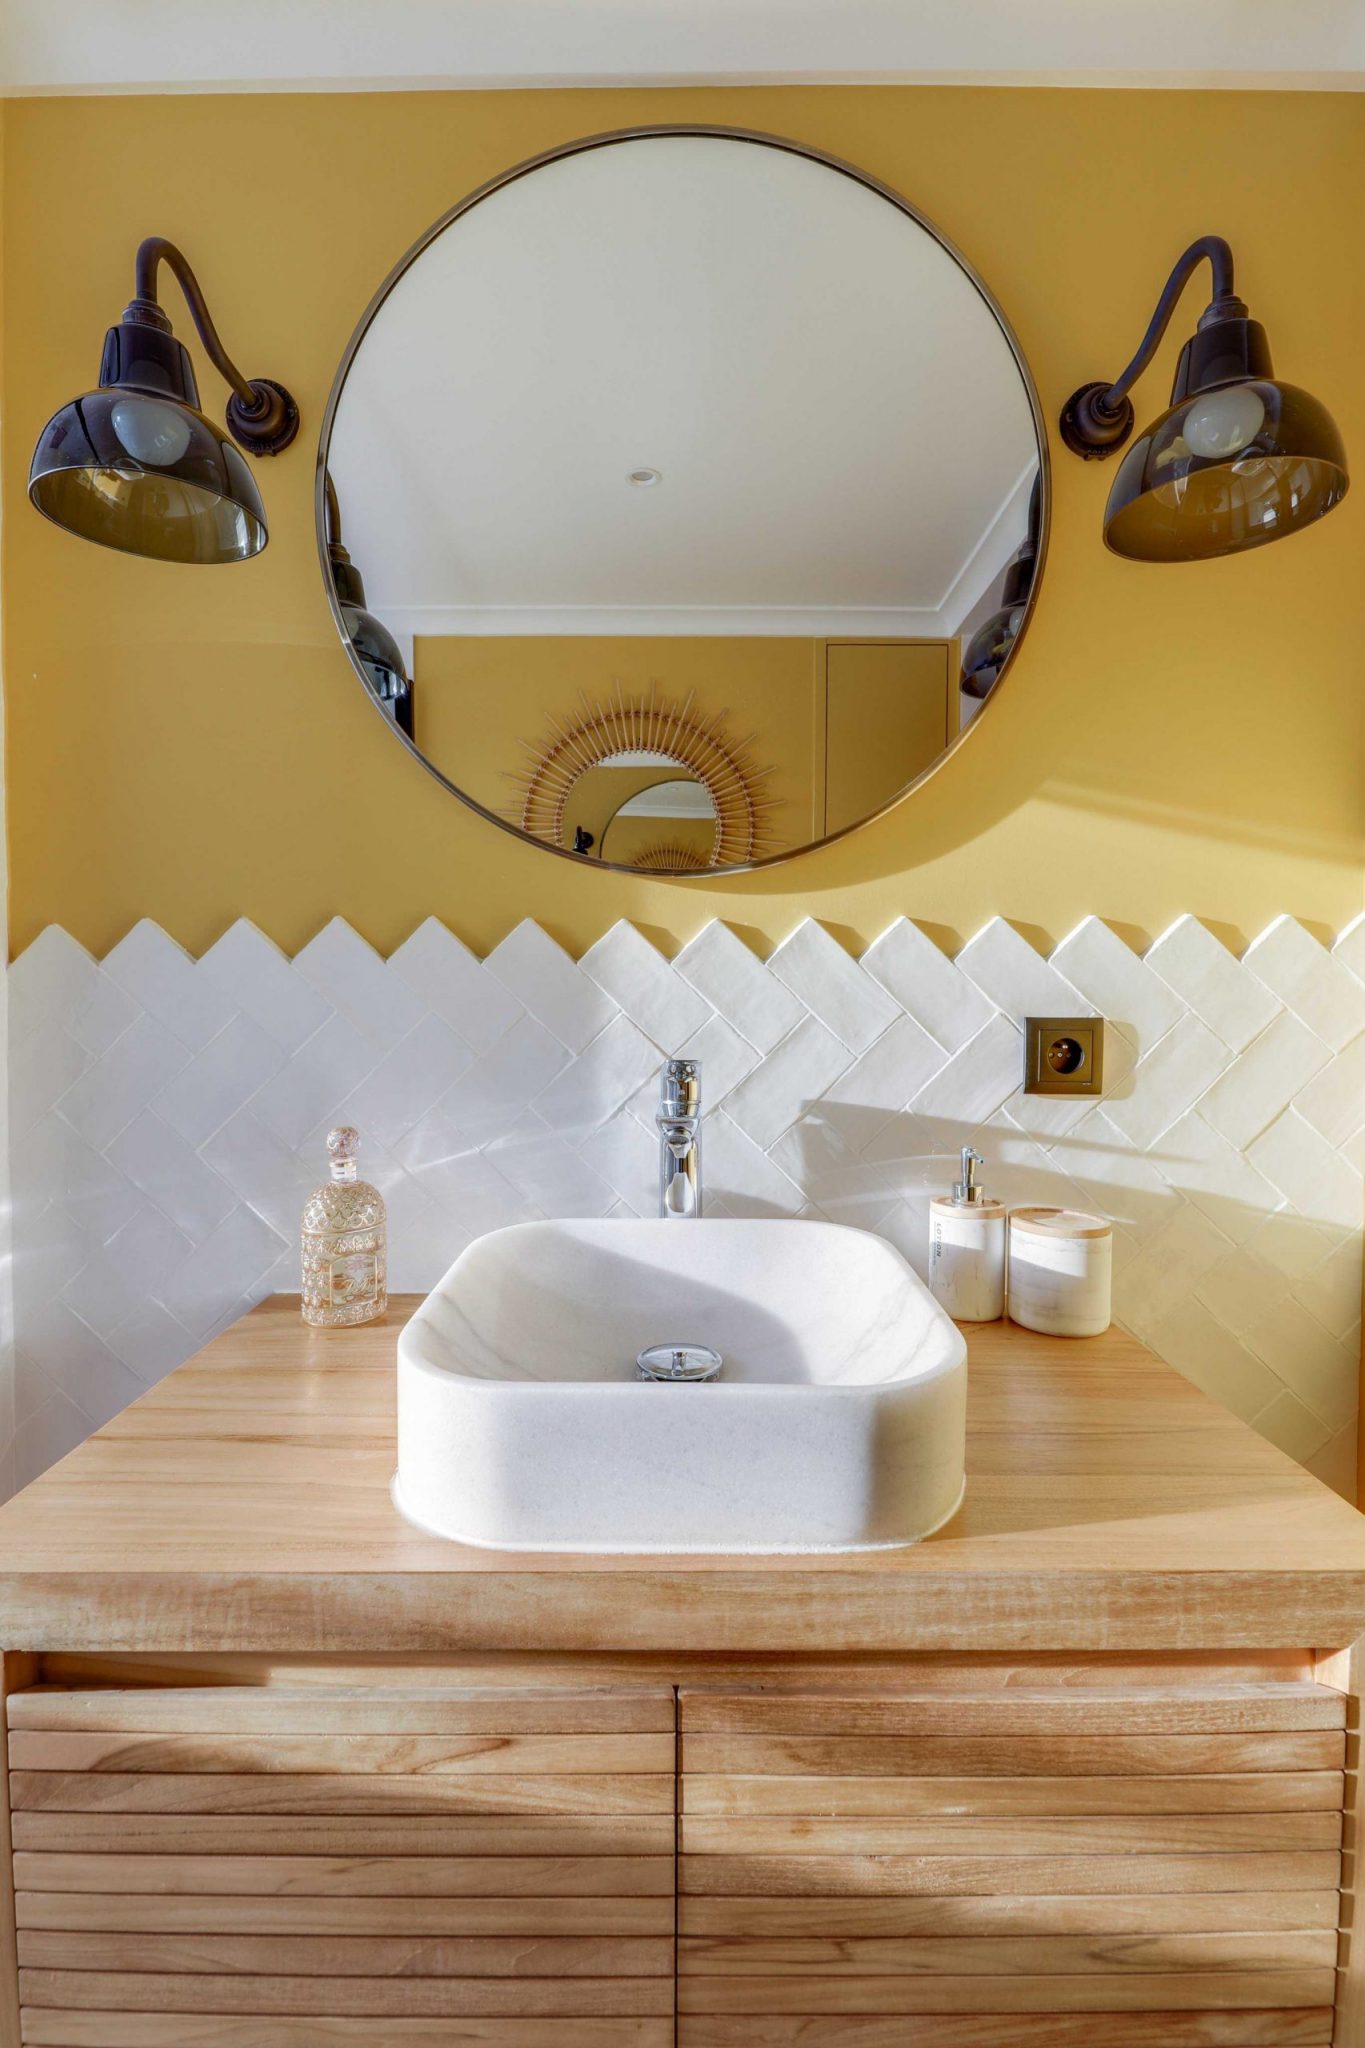 salle de bain design avec mur jaune